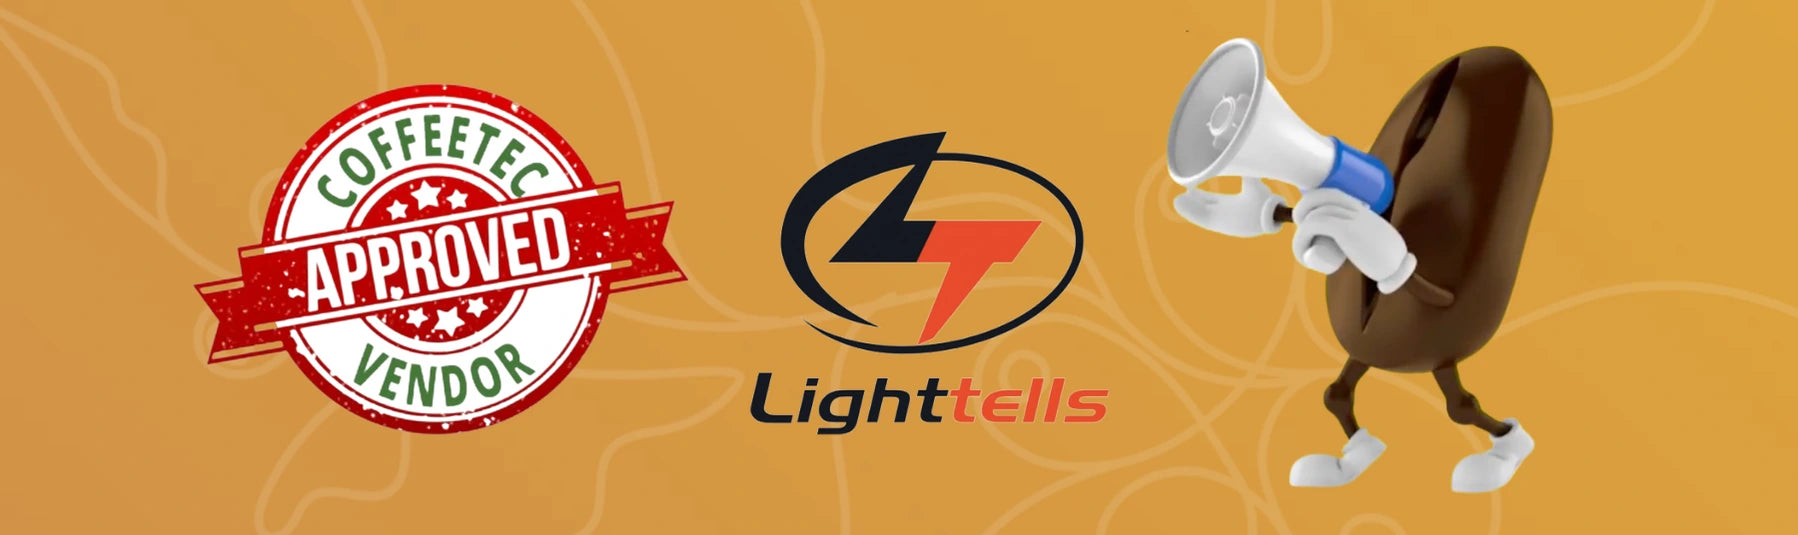 CoffeeTec Vendor Spotlight: Lighttells